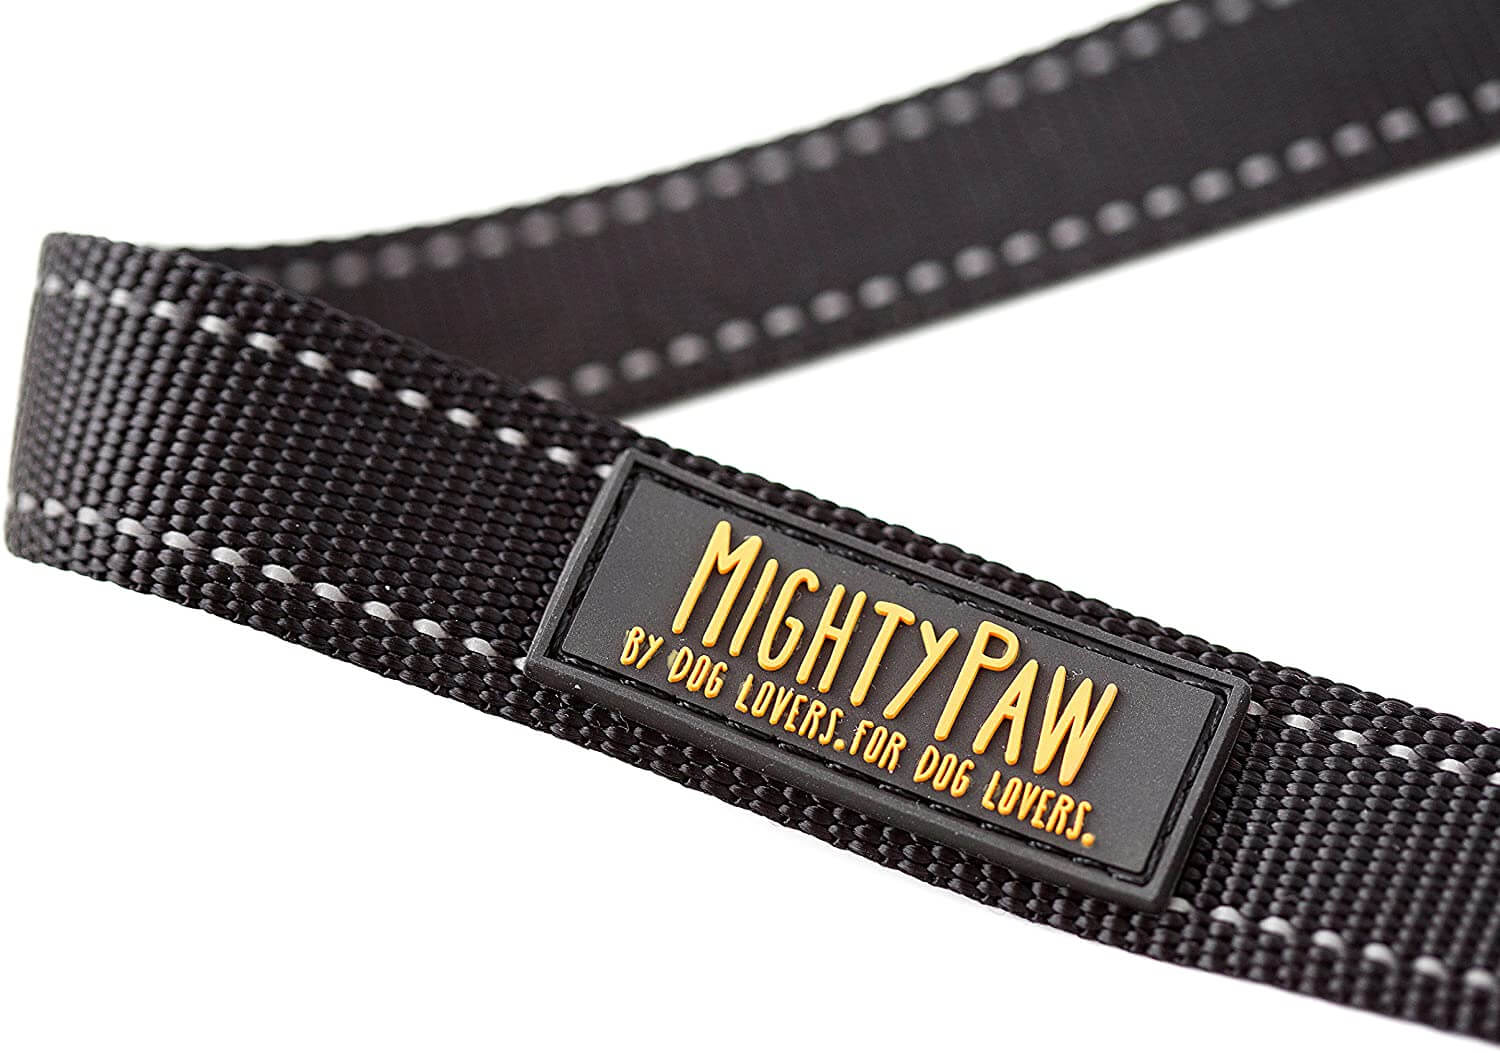 Mighty Paw Standard 6-Foot Dog Leash